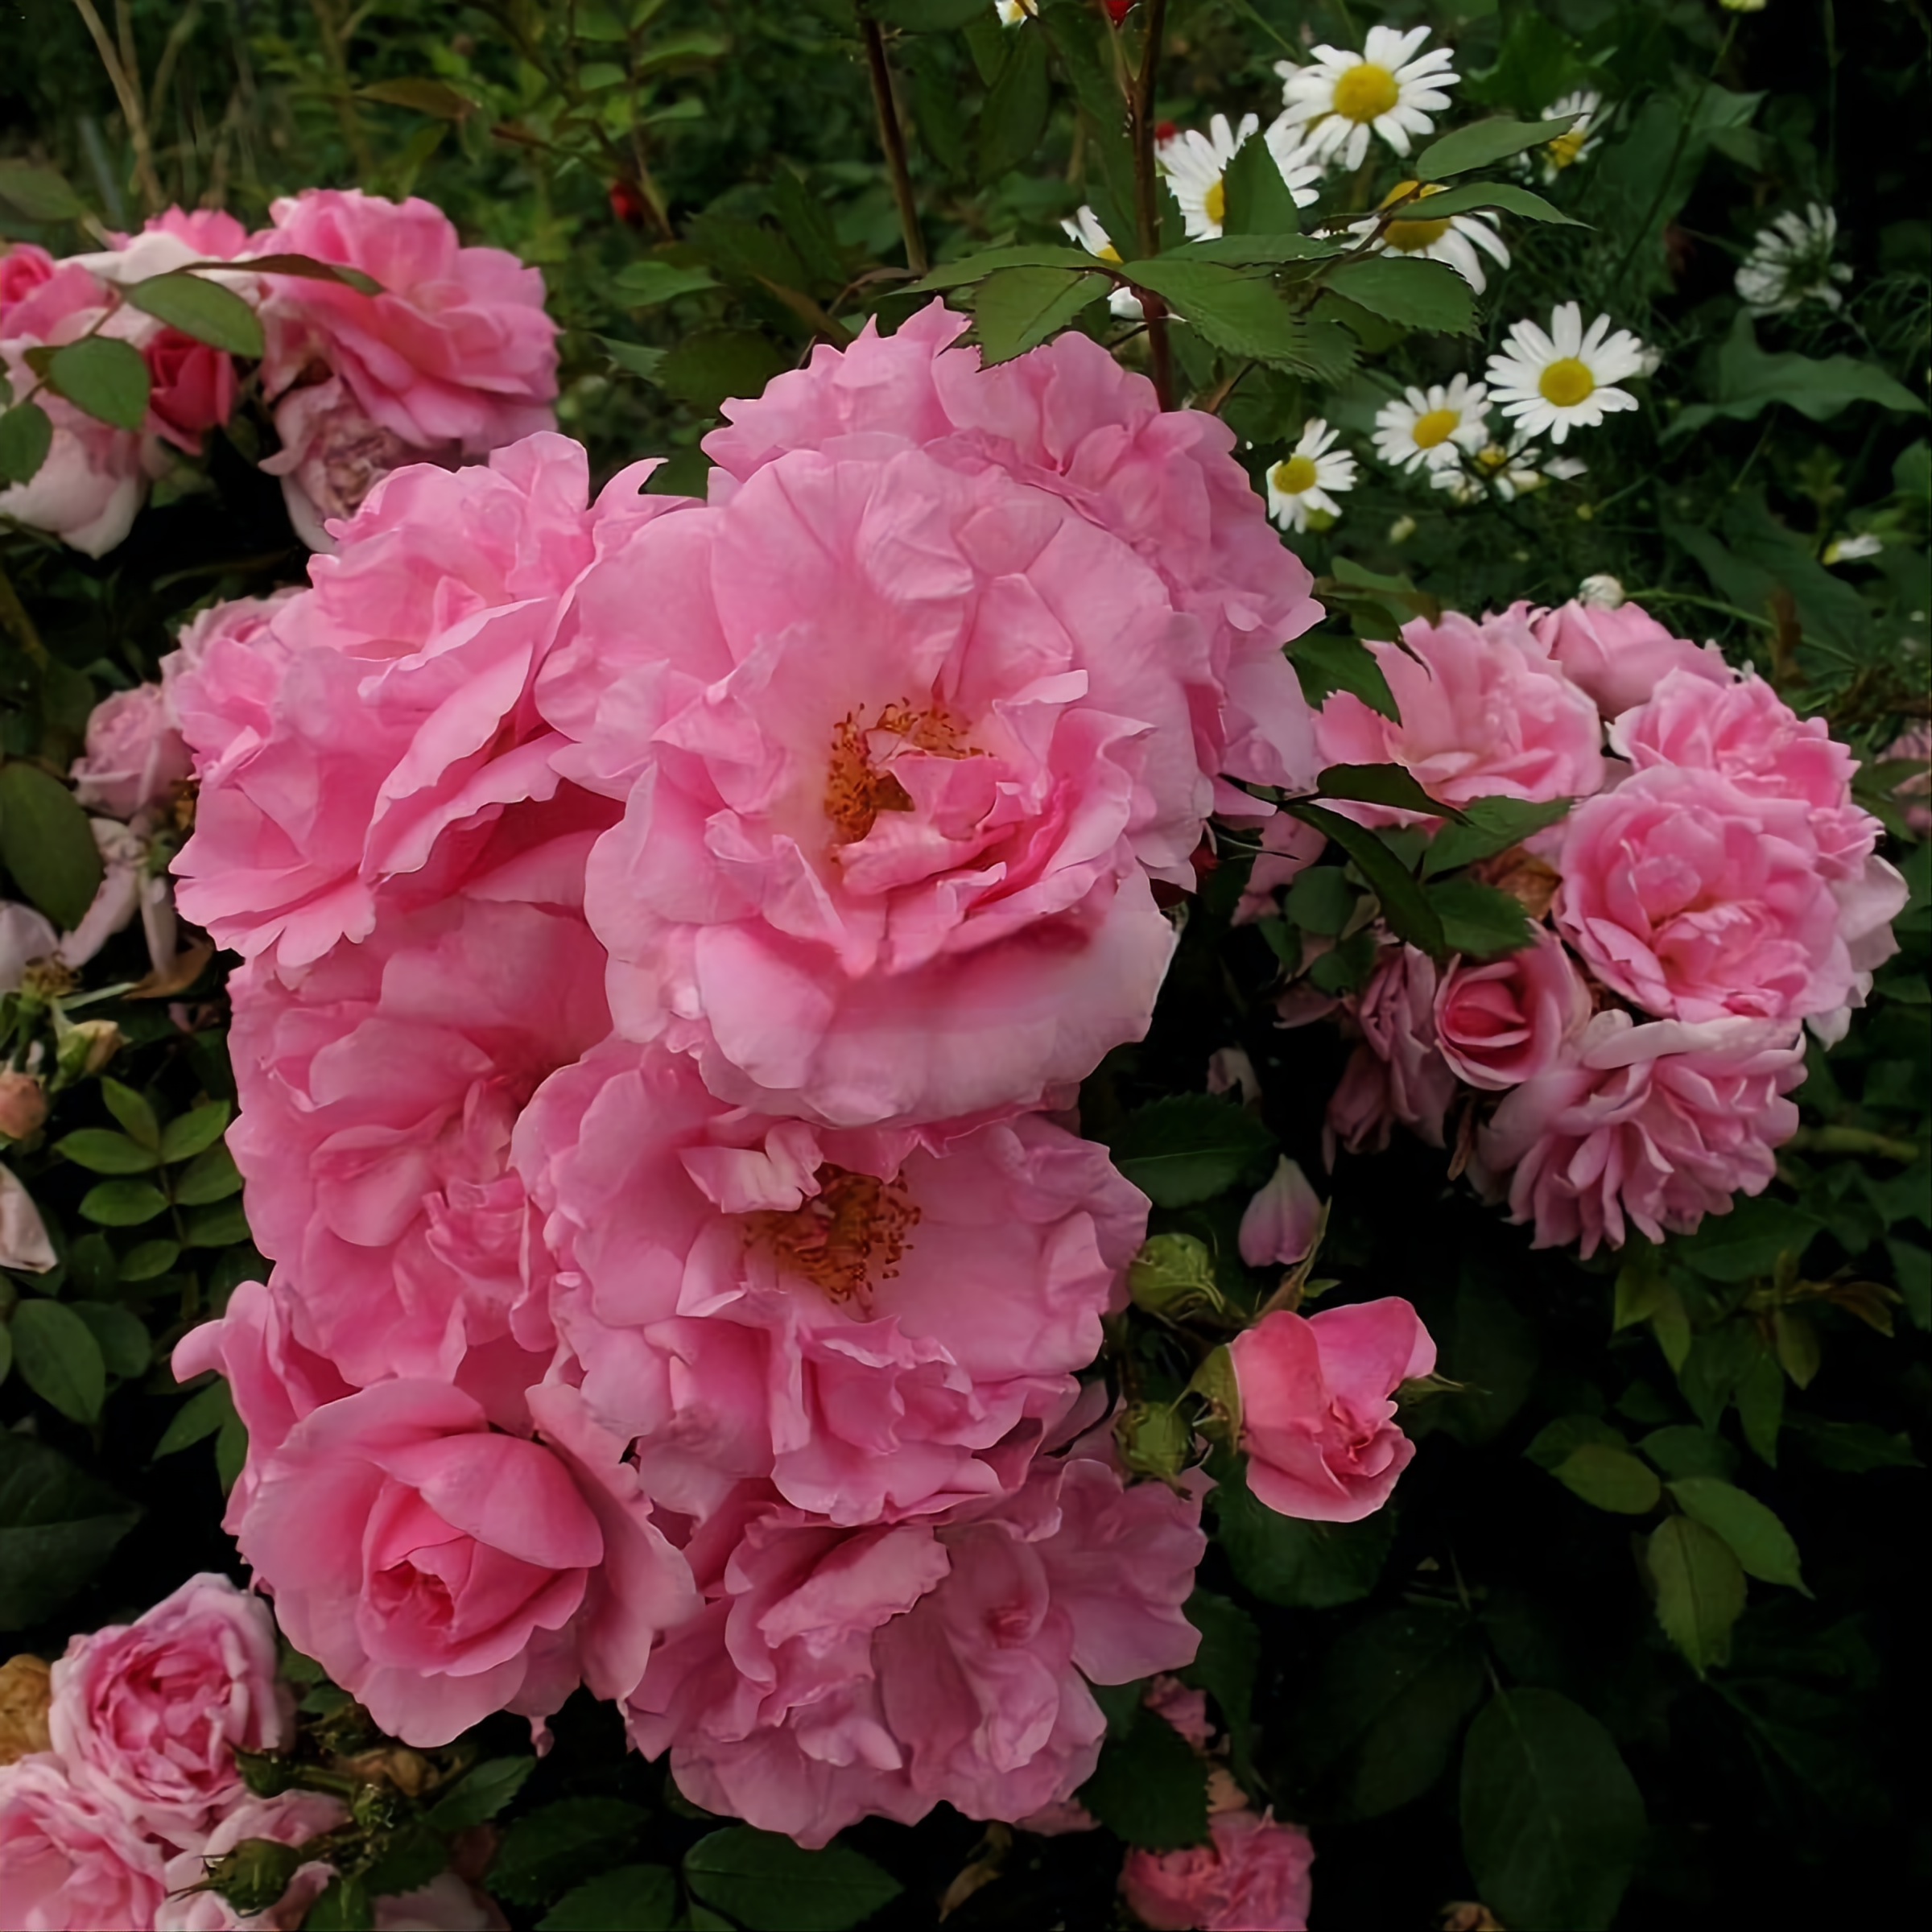 Плетистая роза джон дэвис фото и описание